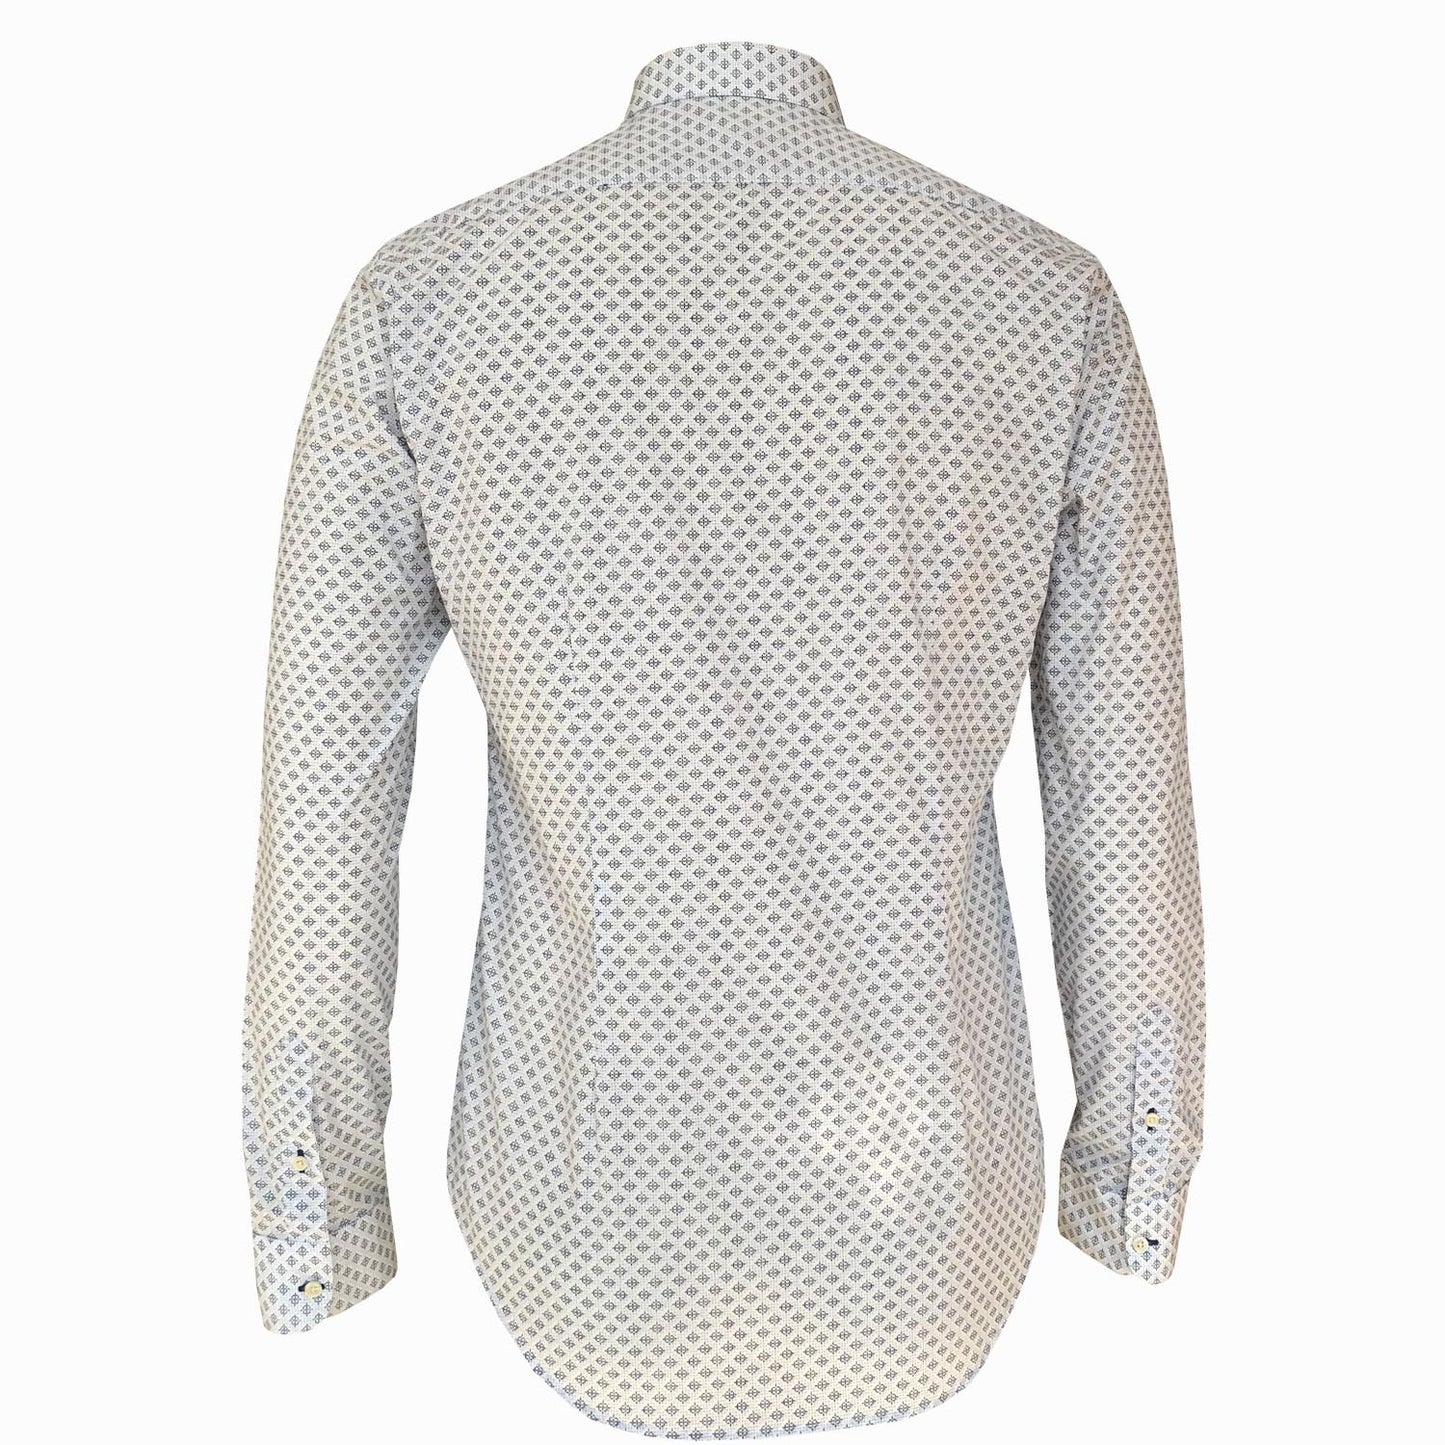 LUXE HOMME SELECT - Premium Oxford Long Sleeve Shirt (Ocean) - LabelledUp.com